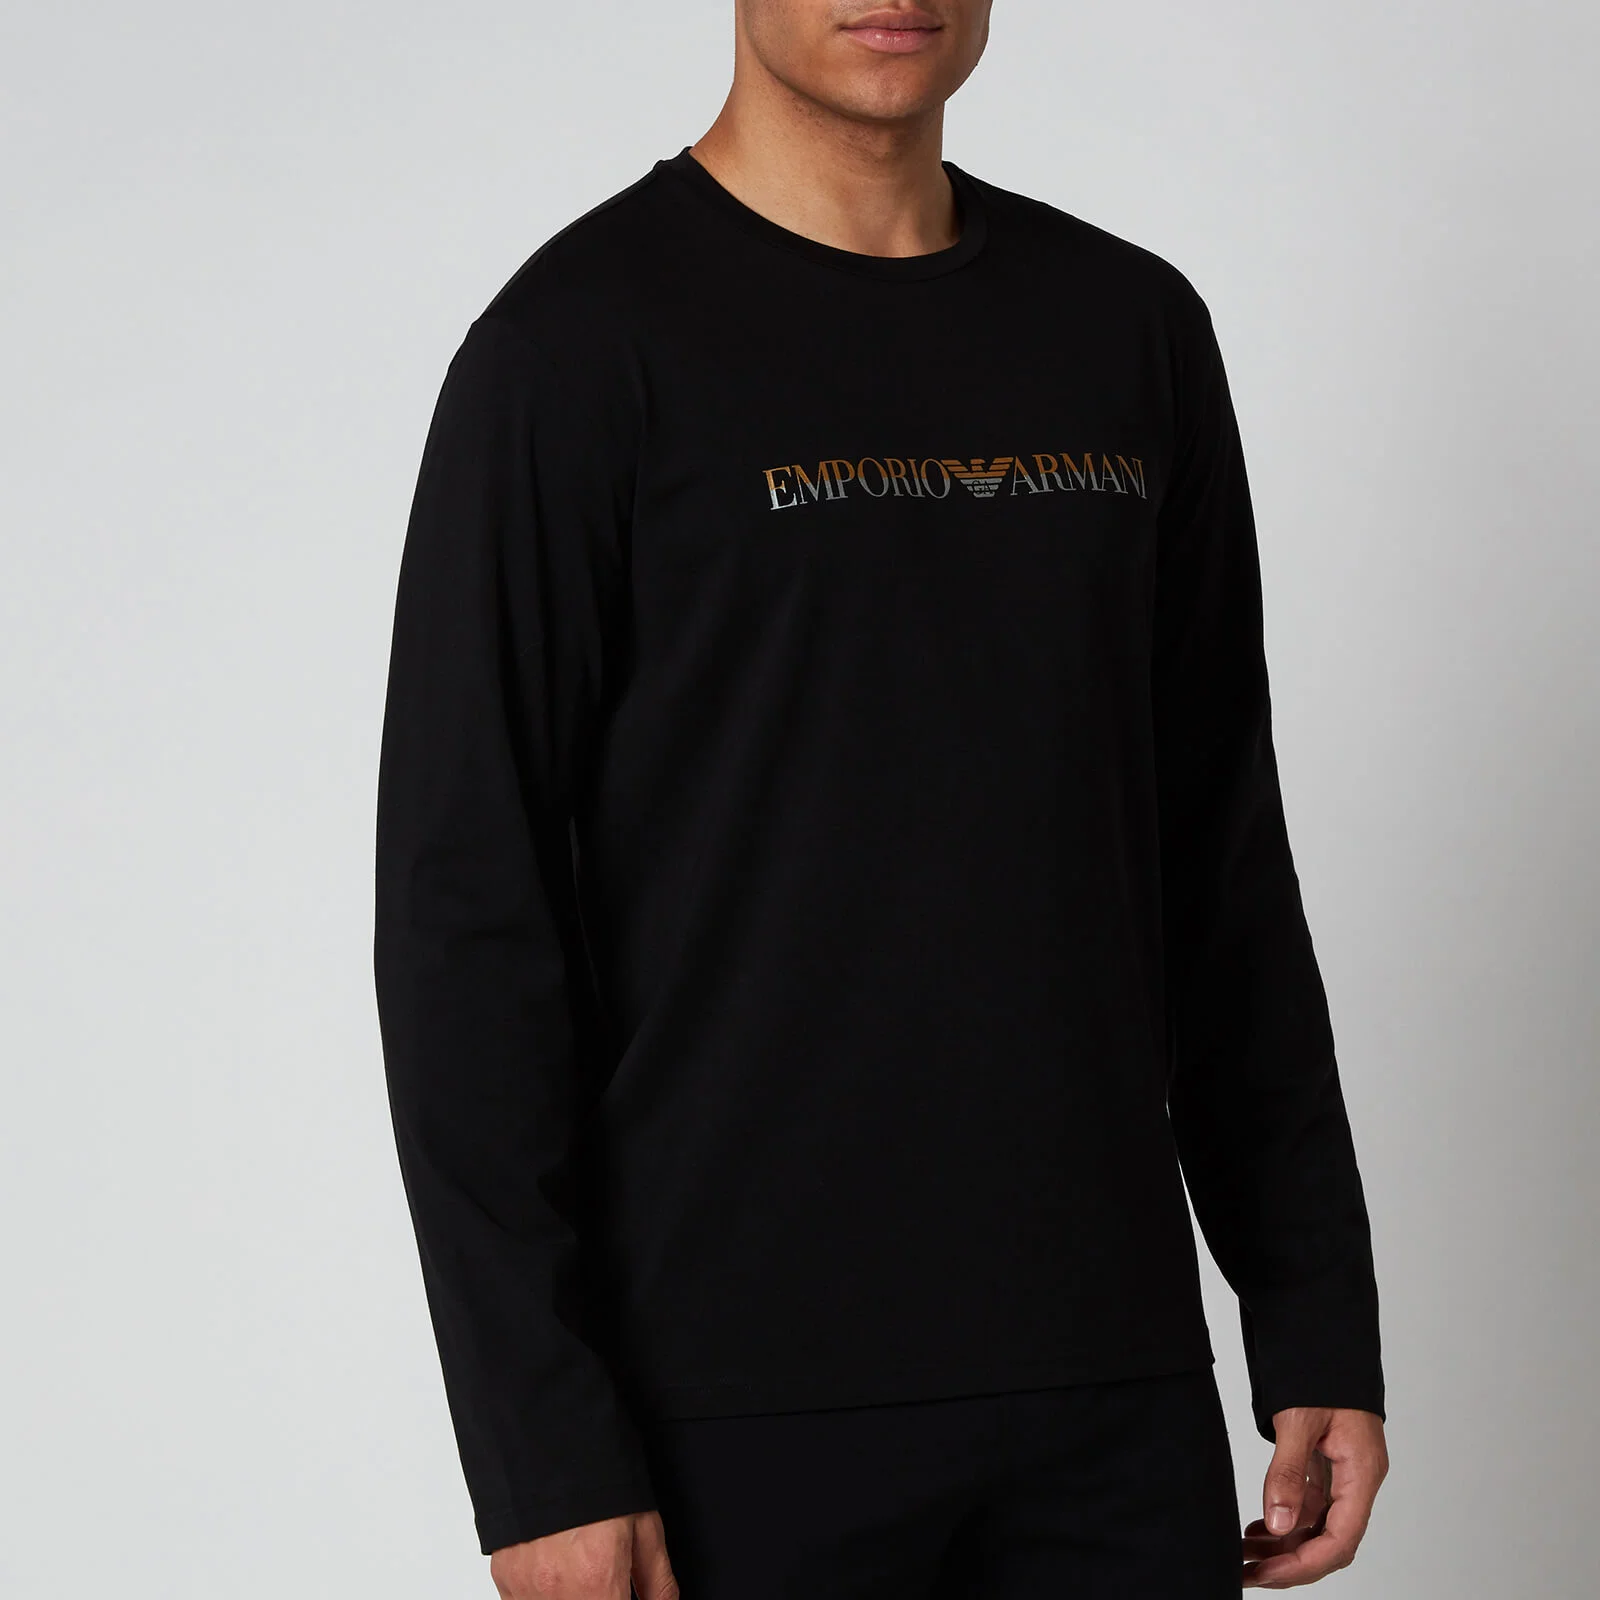 Emporio Armani Men's Long Sleeve T-Shirt - Black Image 1